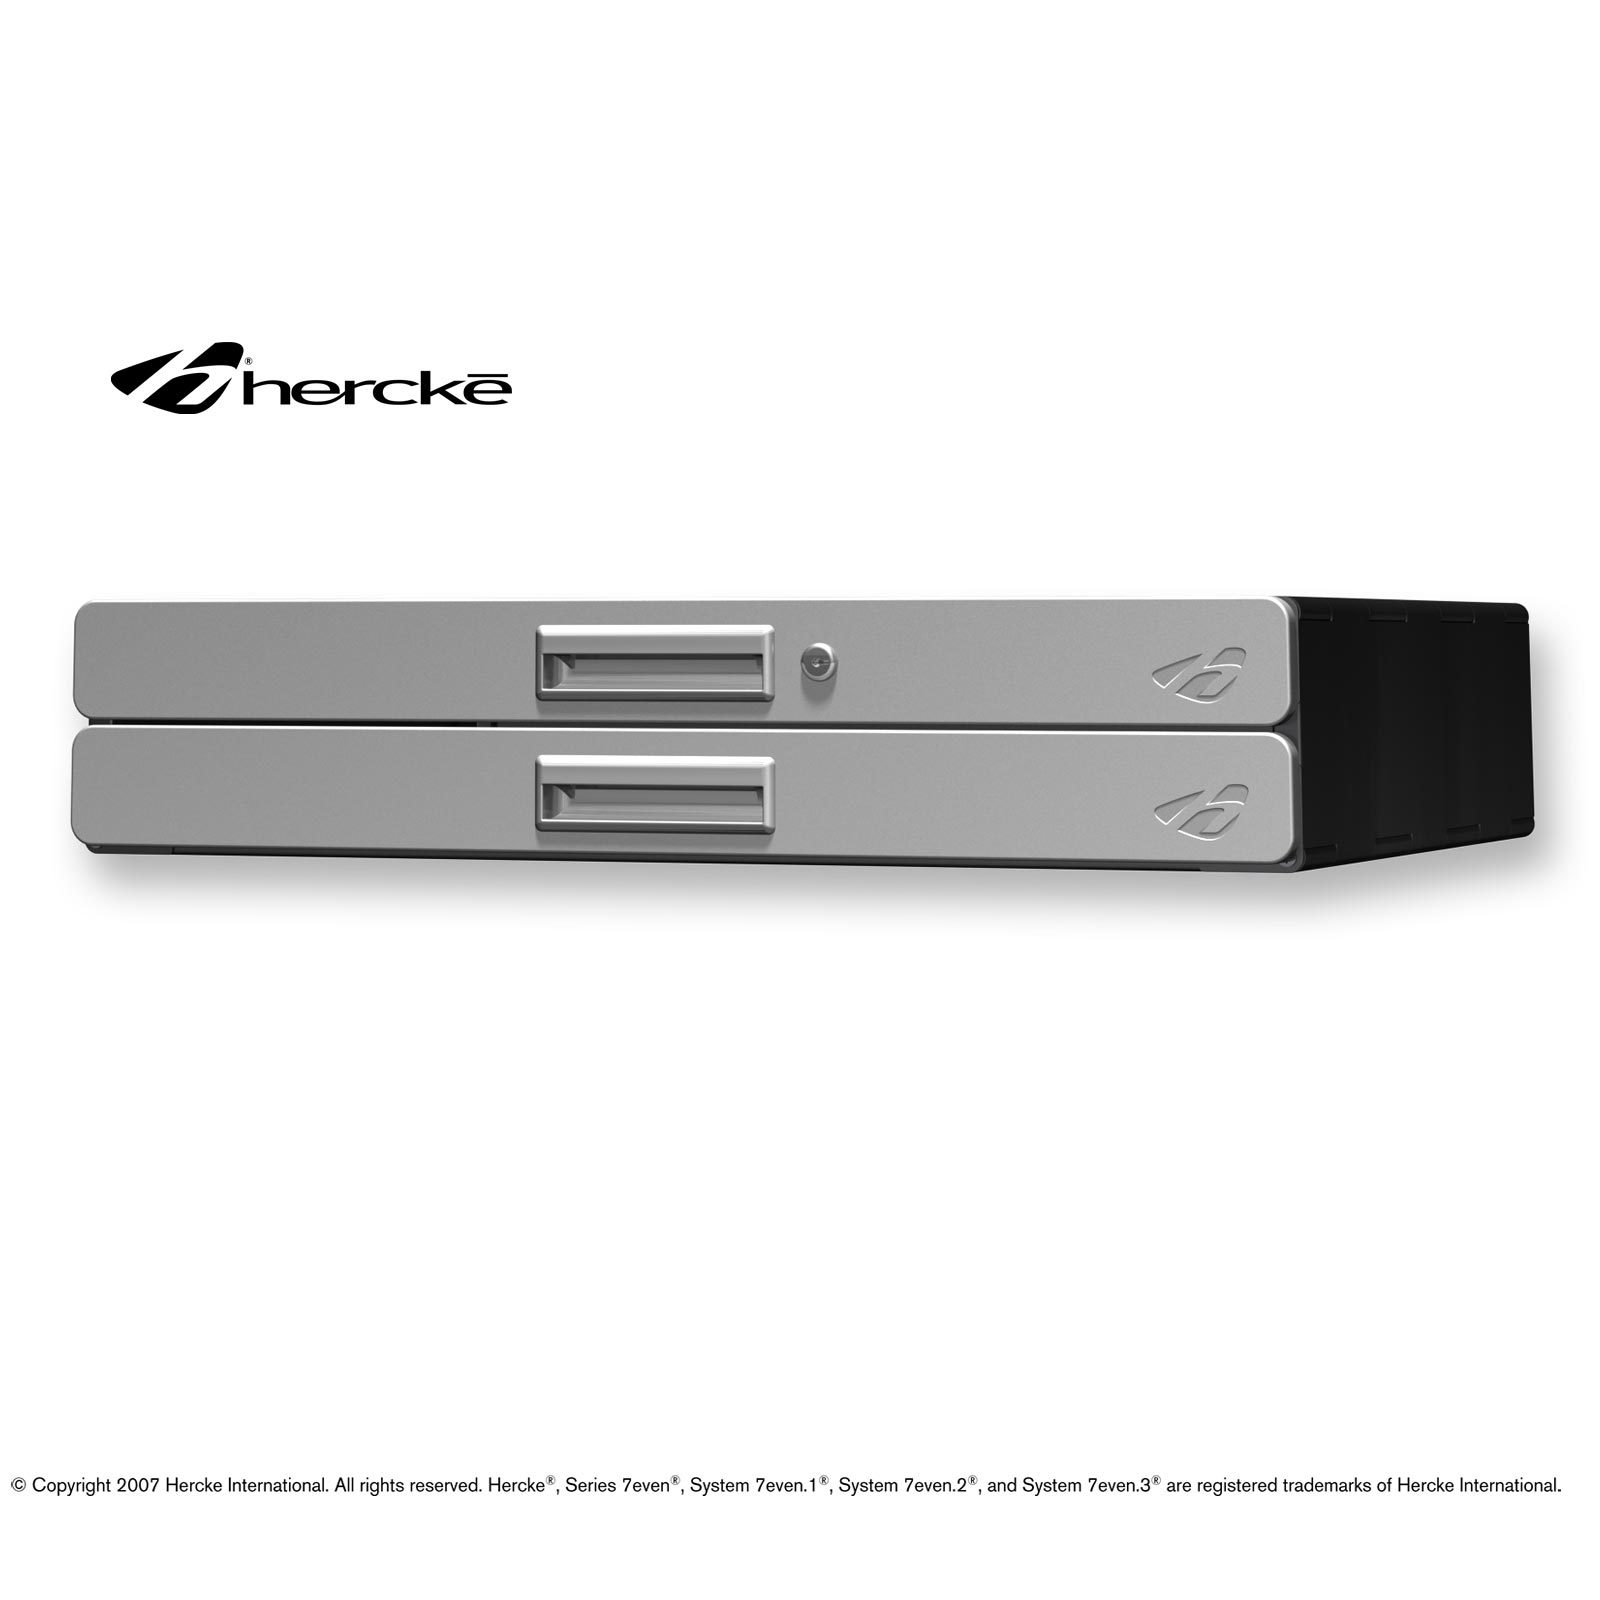 Hercke 3" Duo Storage Drawer - DSD302406